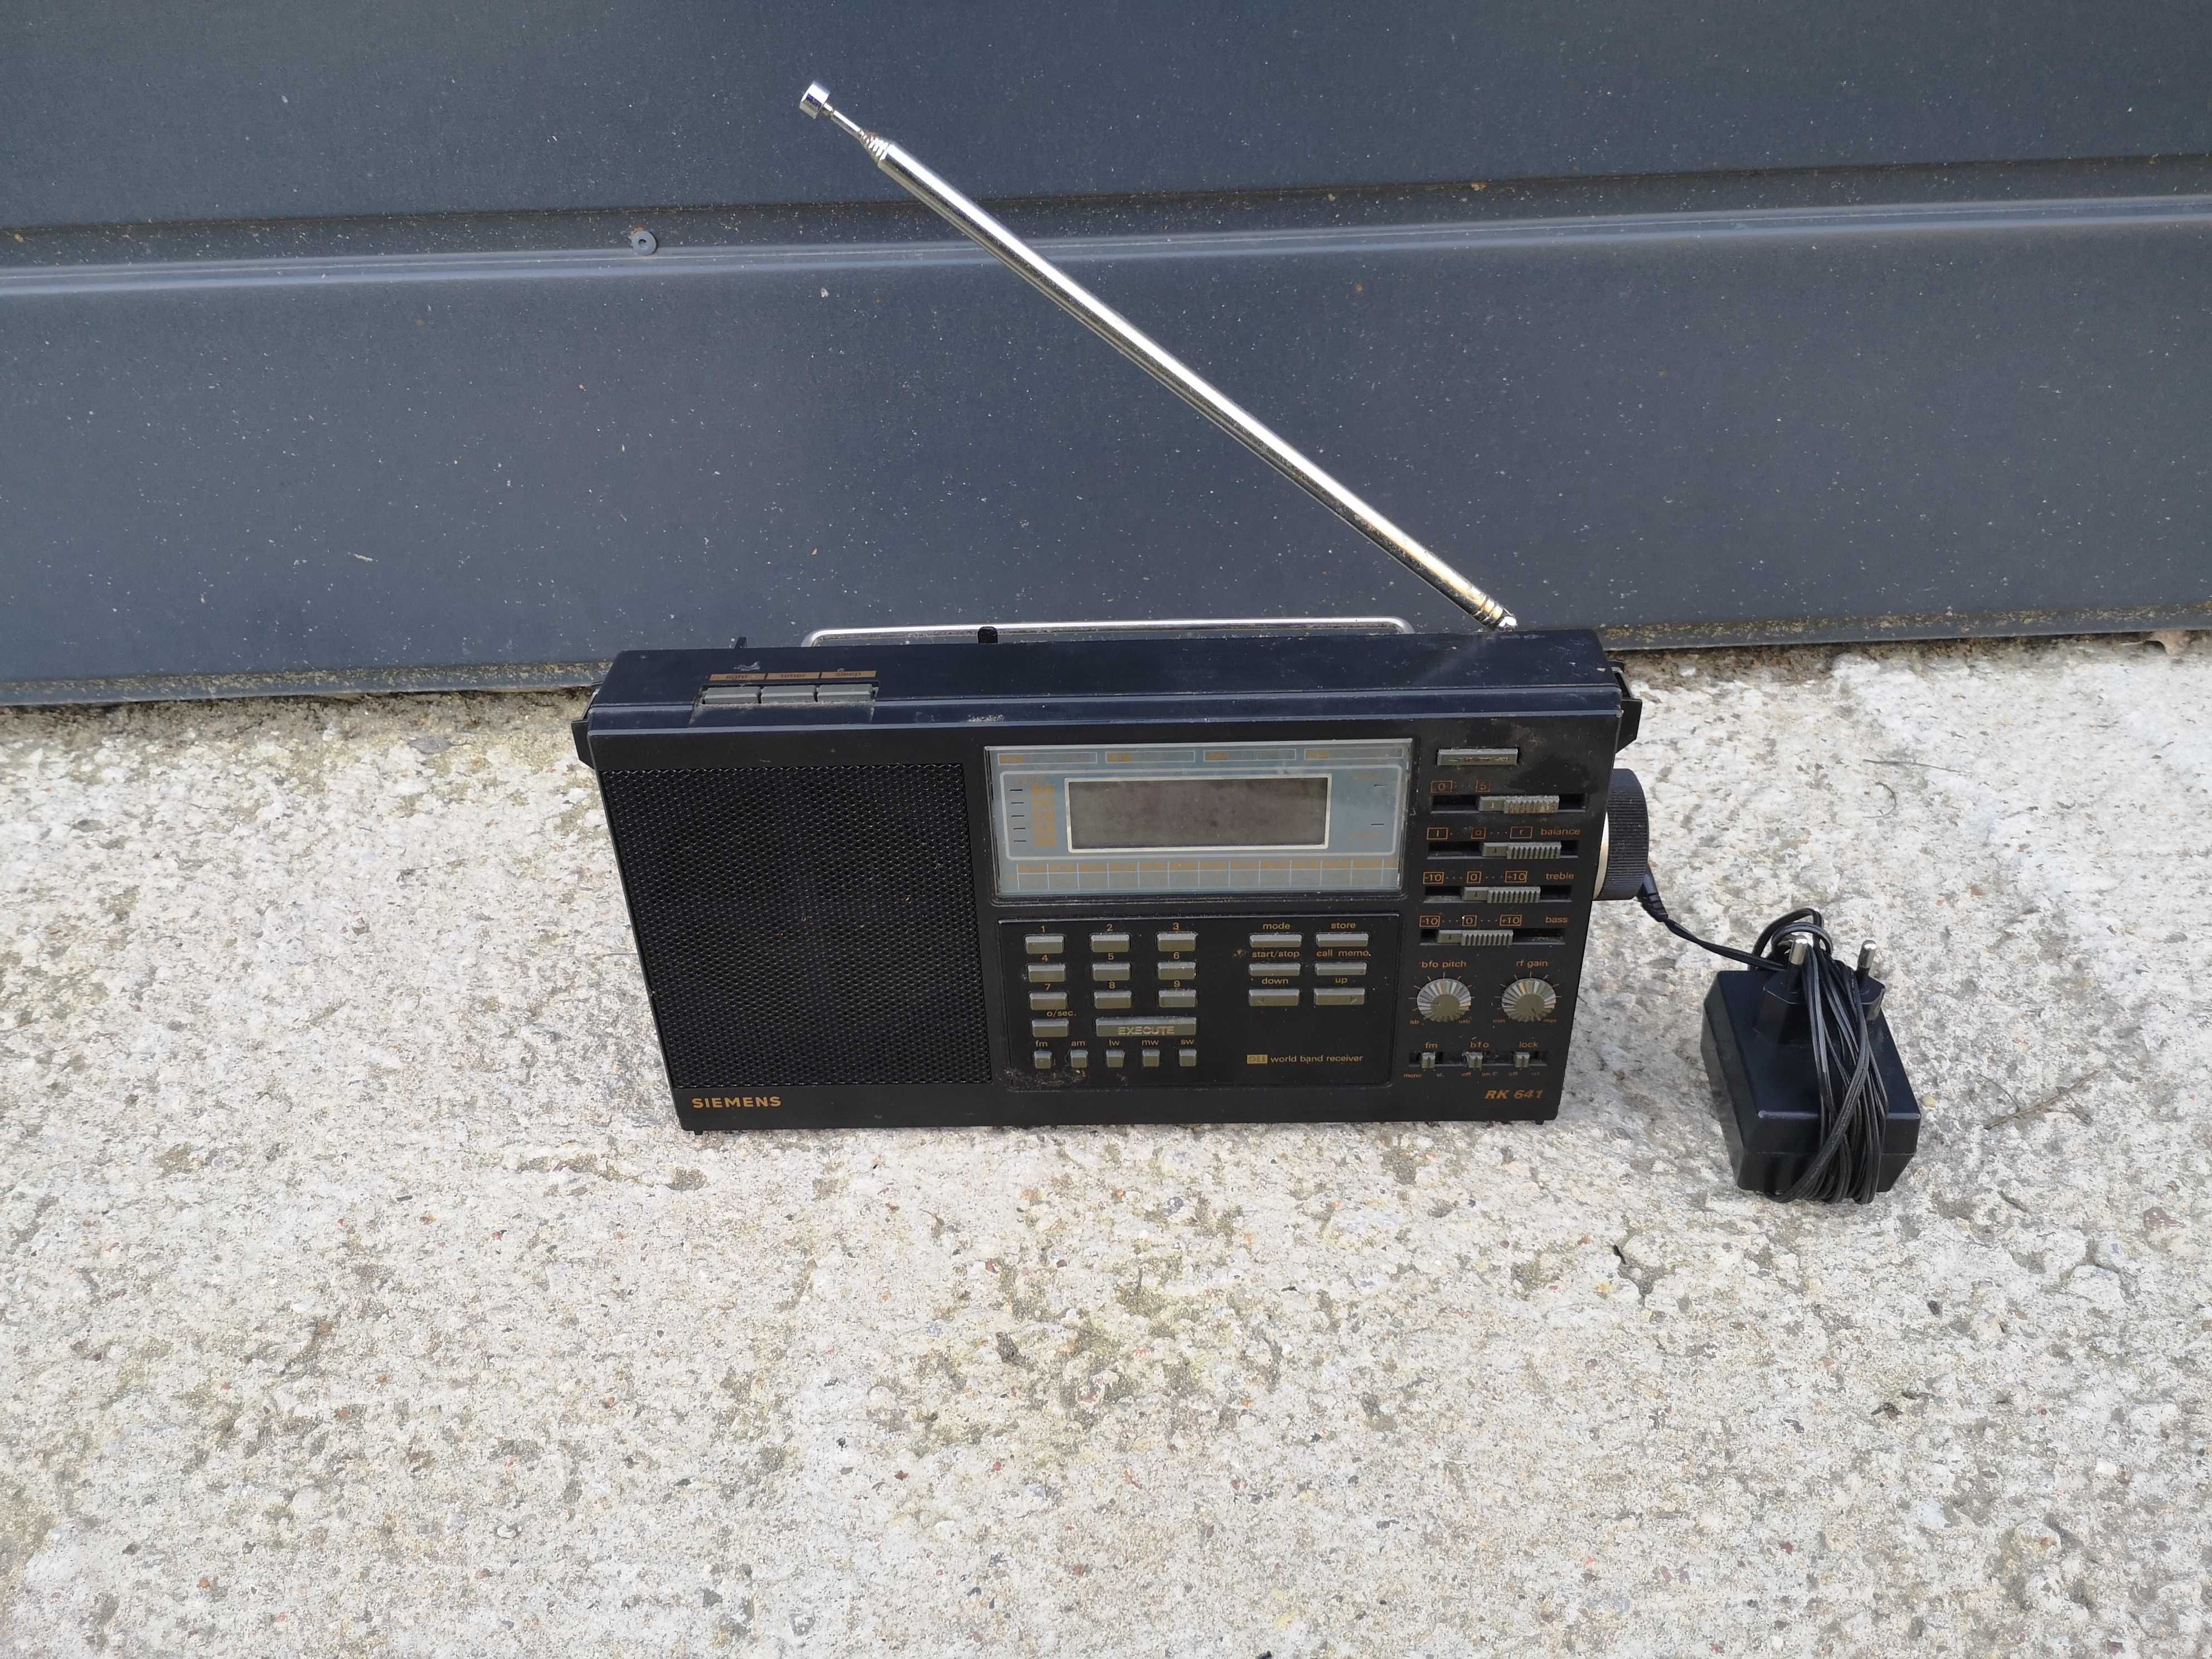 Stare RADIO Siemens RK 641